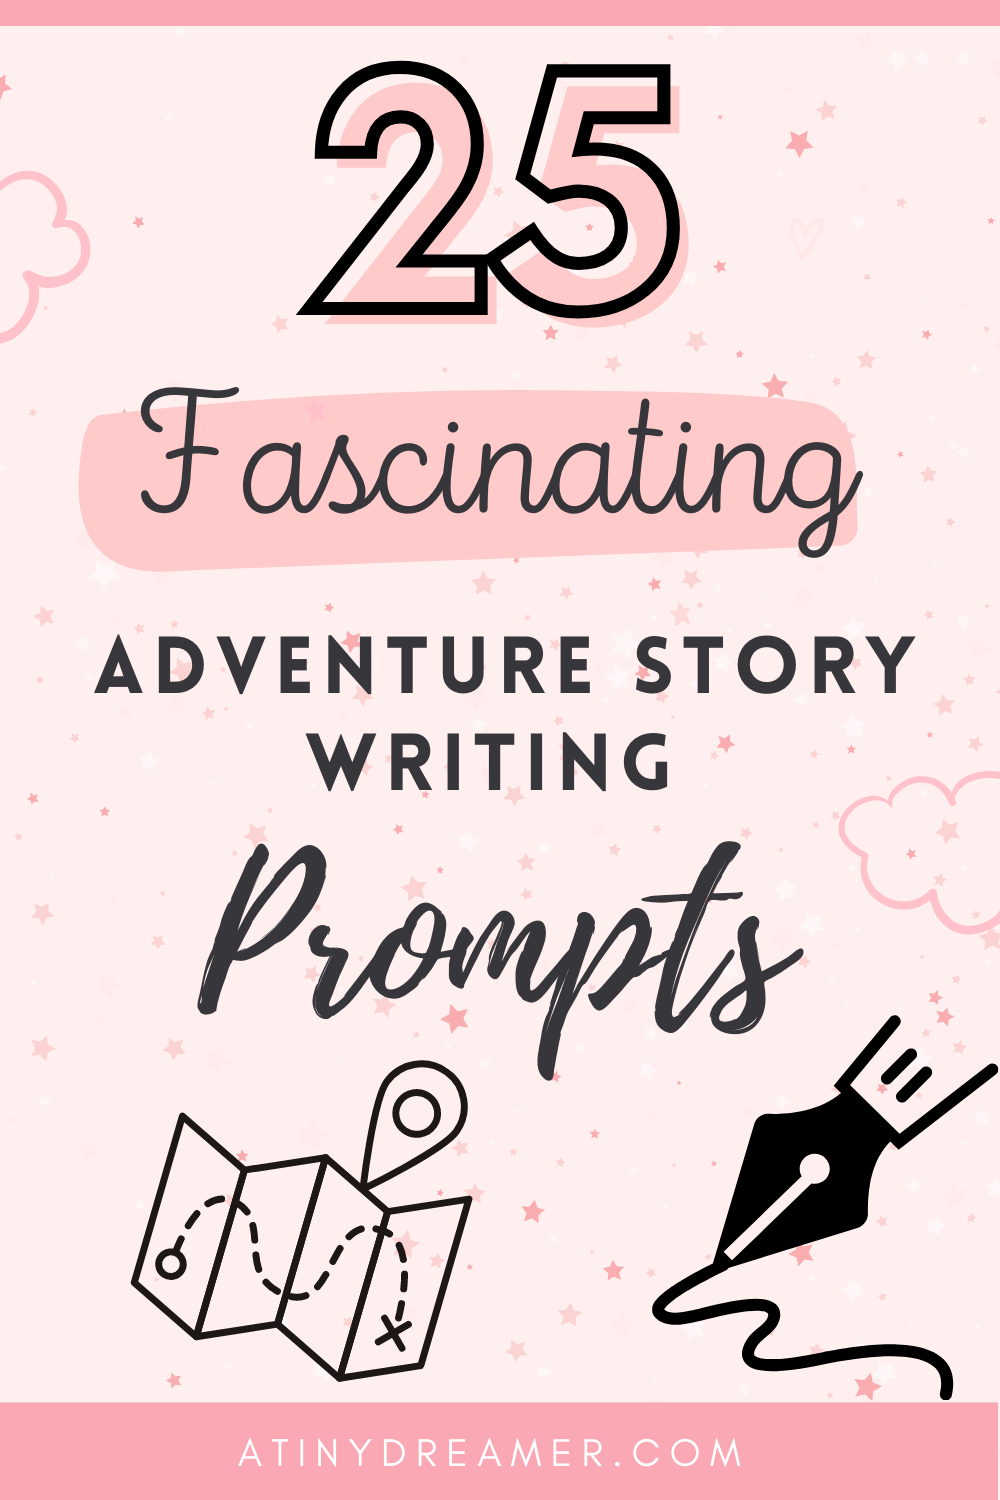 adventure story writing essay